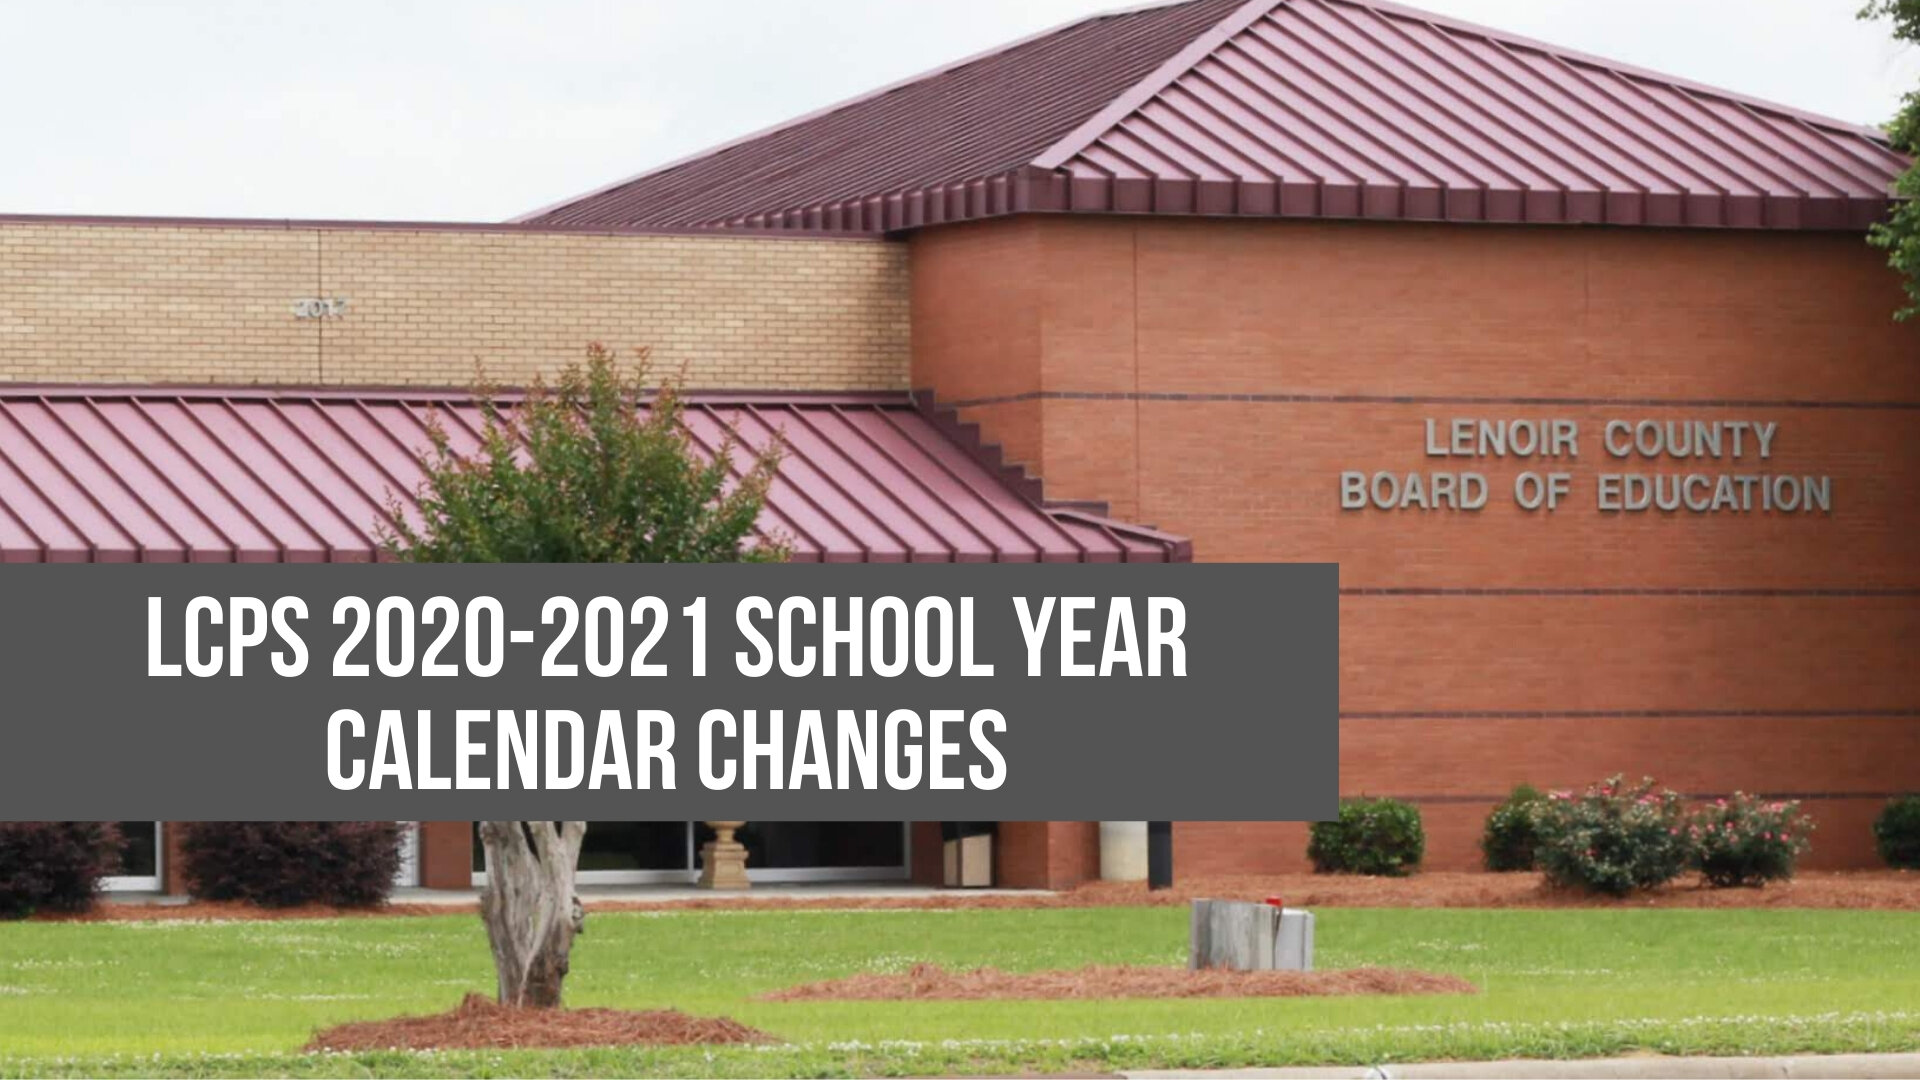 lcps calendar 2021 Lcps 2020 2021 School Year Calendar Changes Neuse News lcps calendar 2021